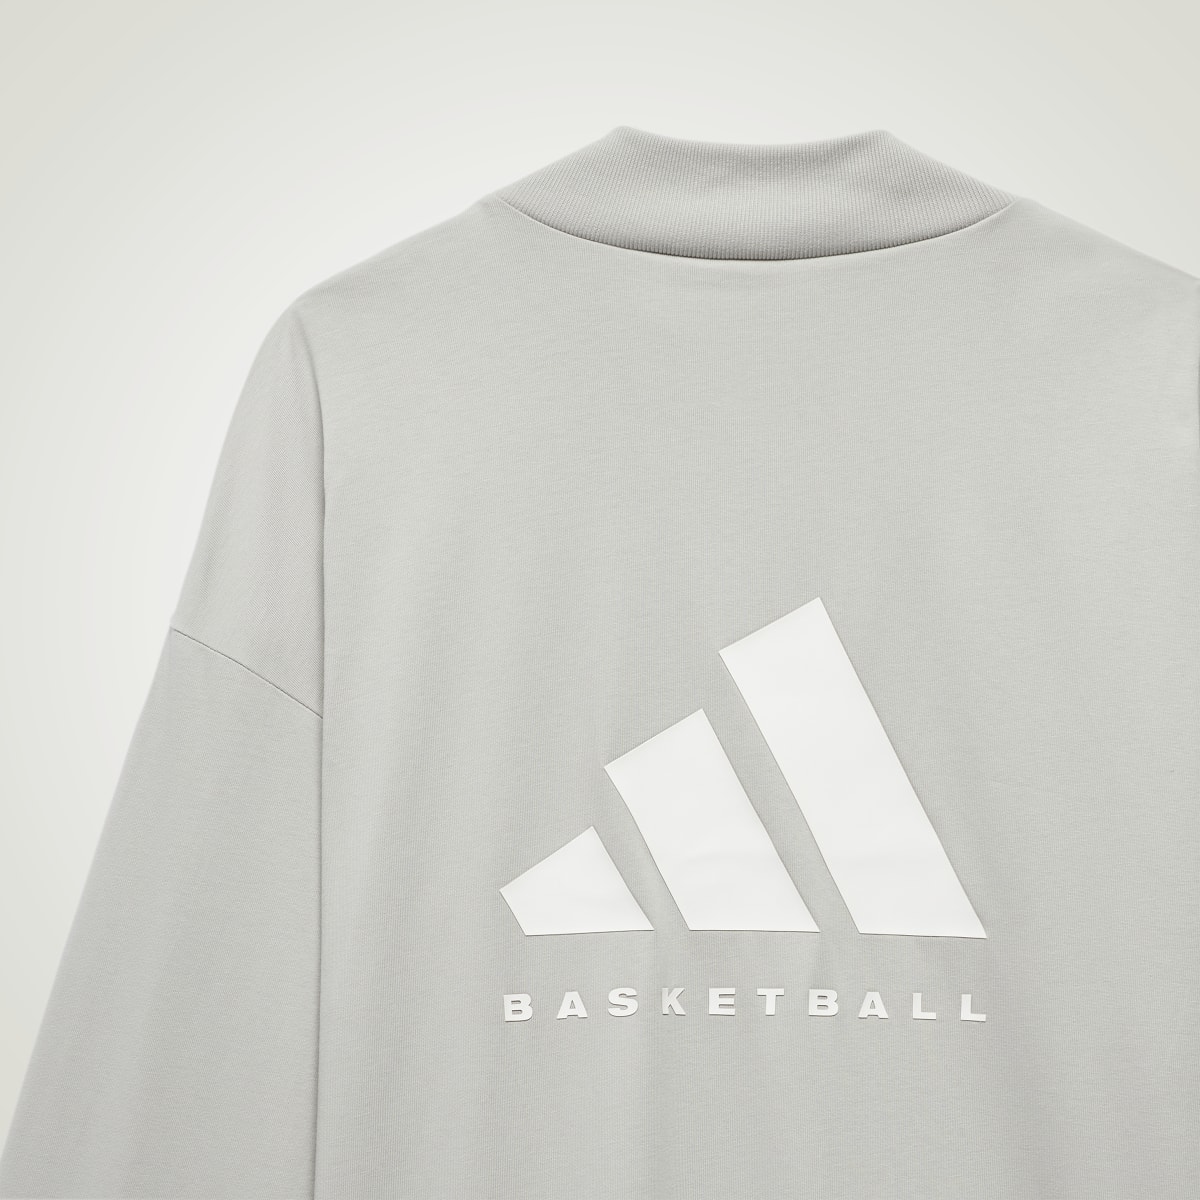 Adidas Basketball Long Sleeve Tee. 6